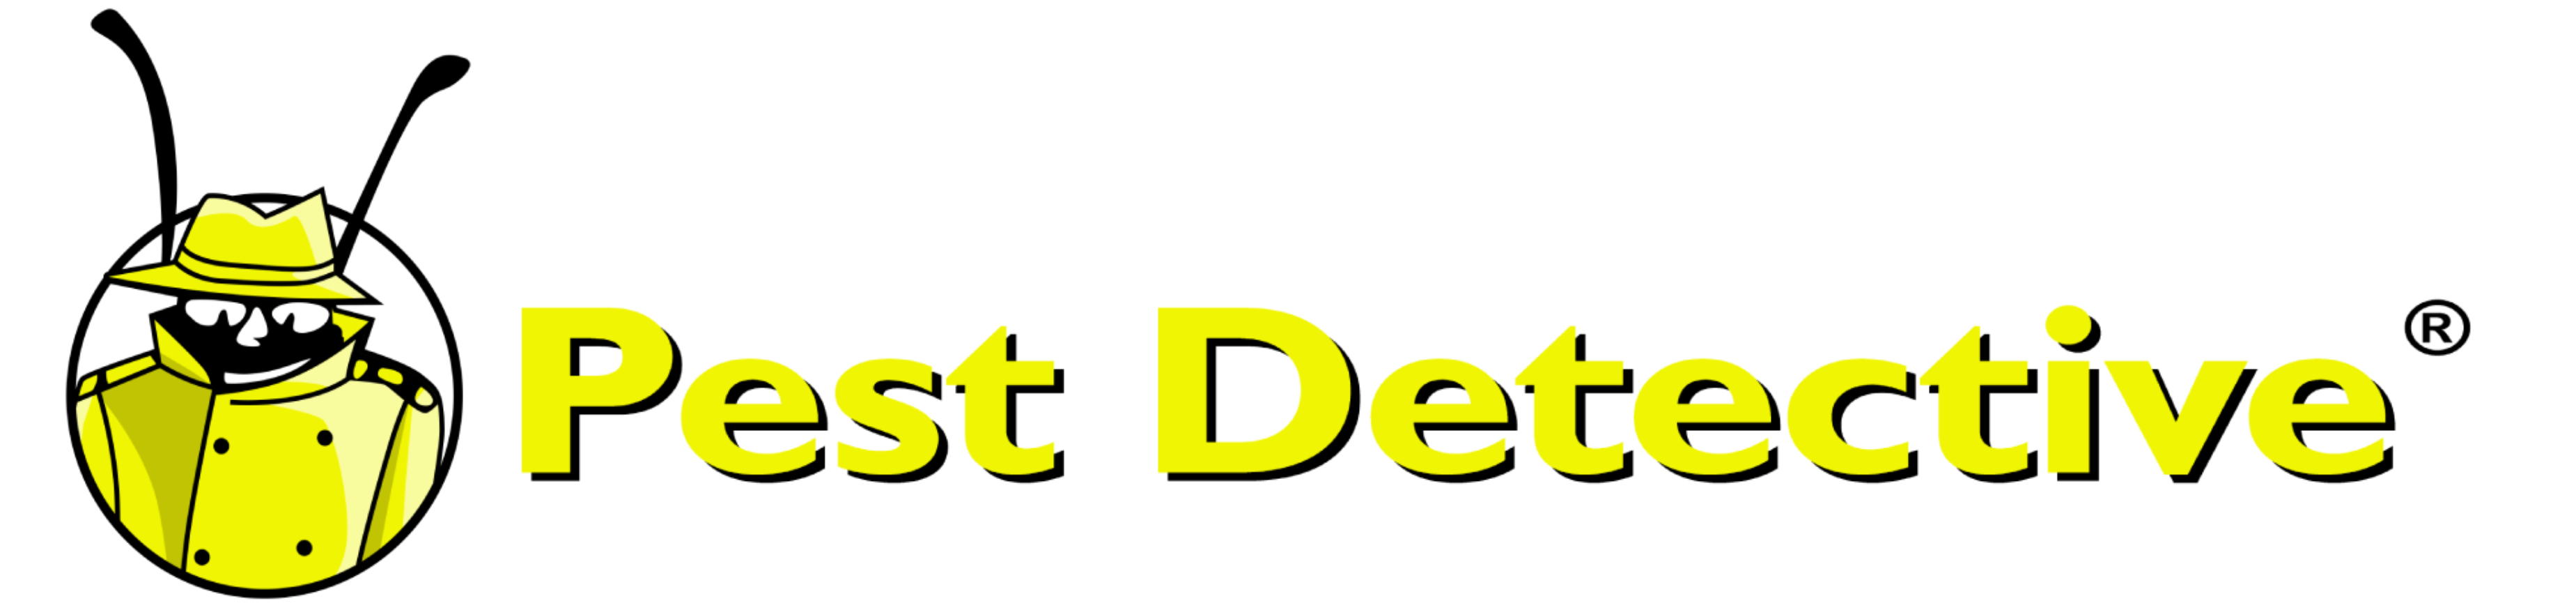 Pest Detective Footer Logo | Pest Detective Pest Control